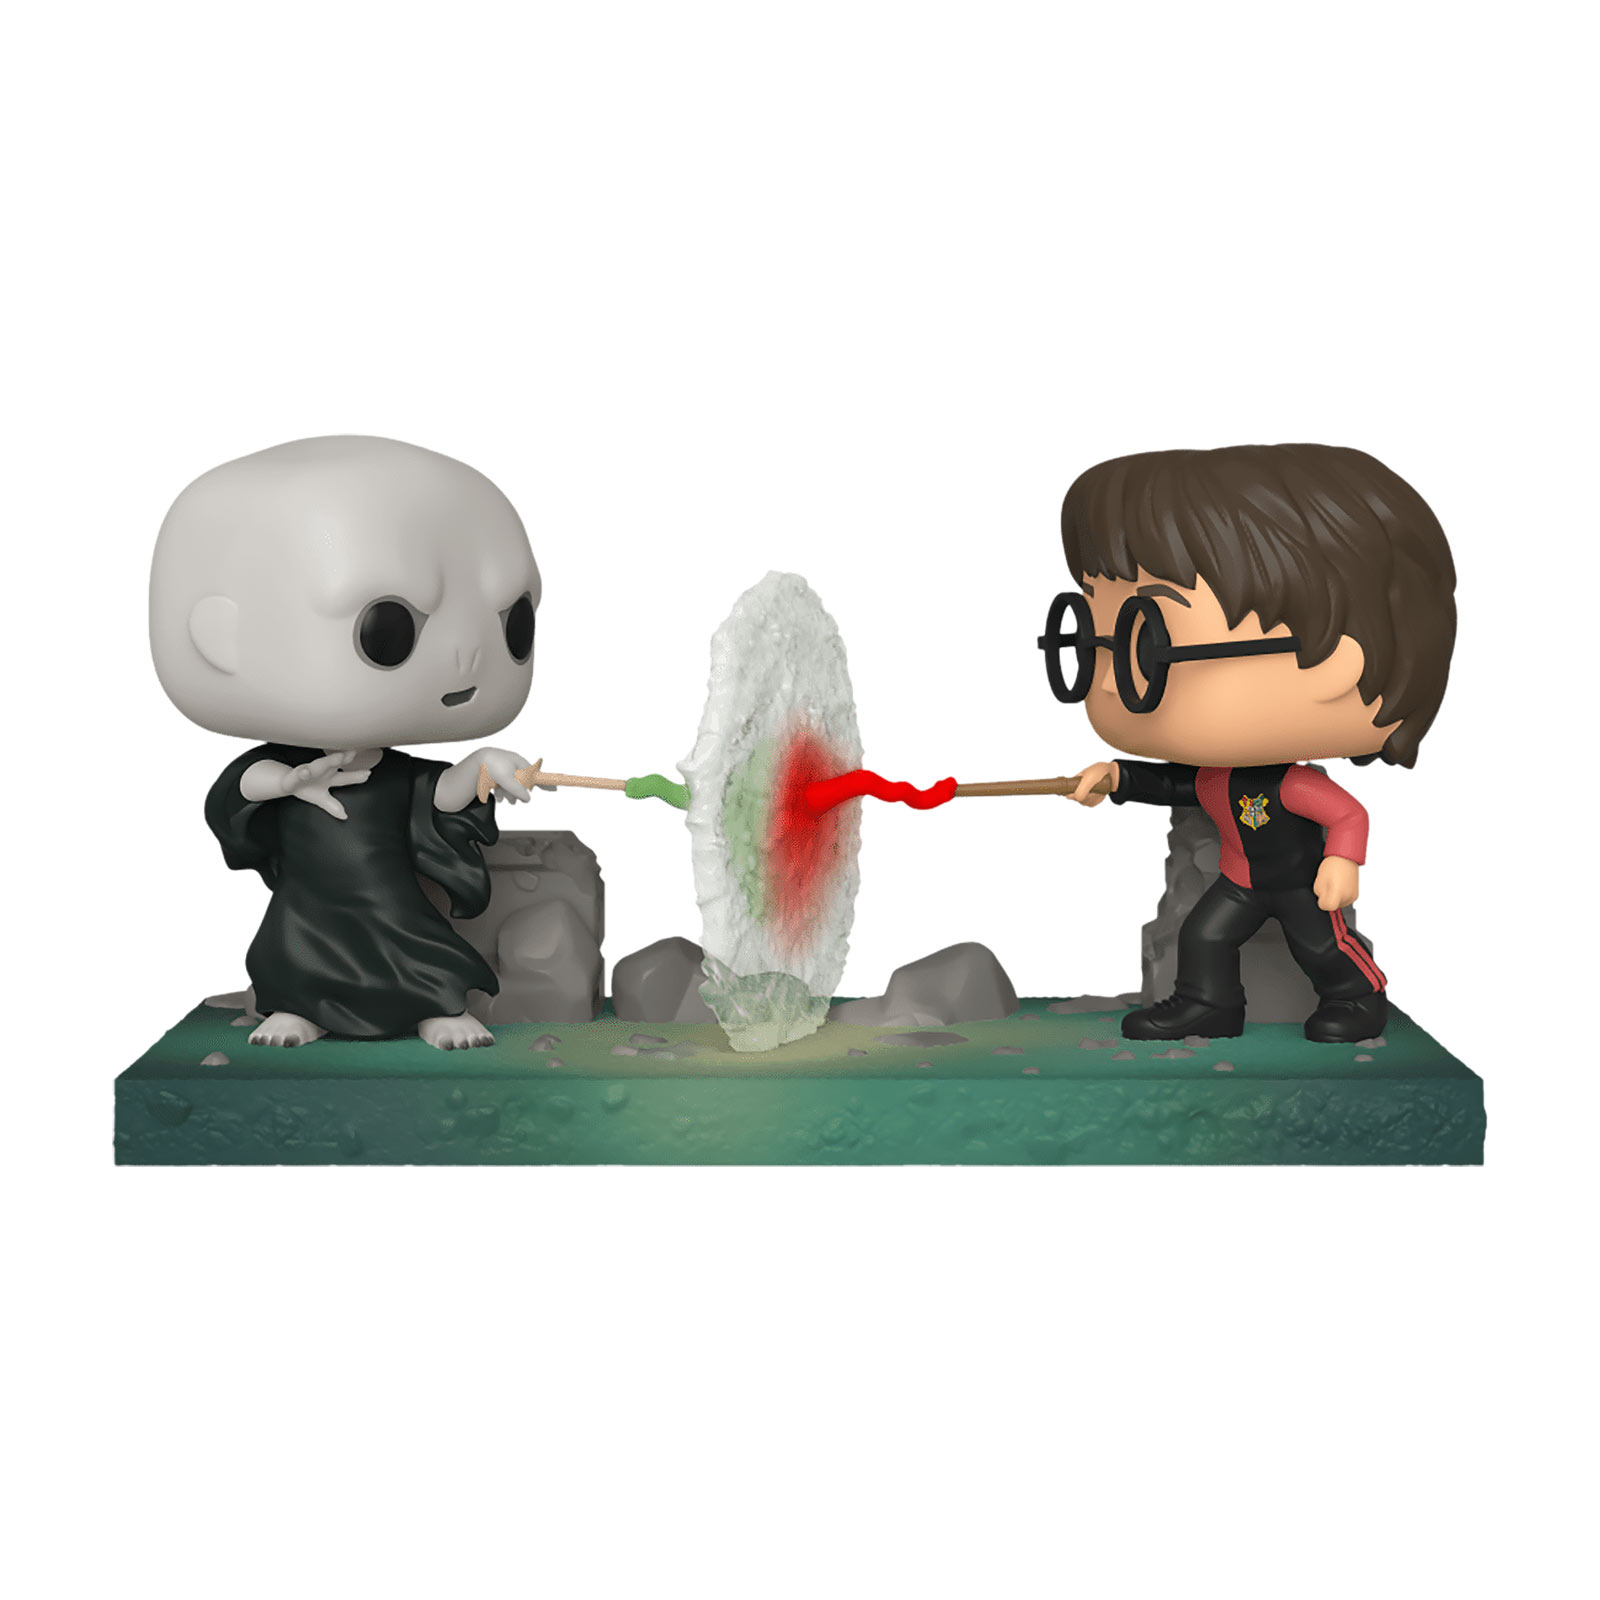 Harry Potter - Harry vs. Voldemort Funko Pop Figurine Set